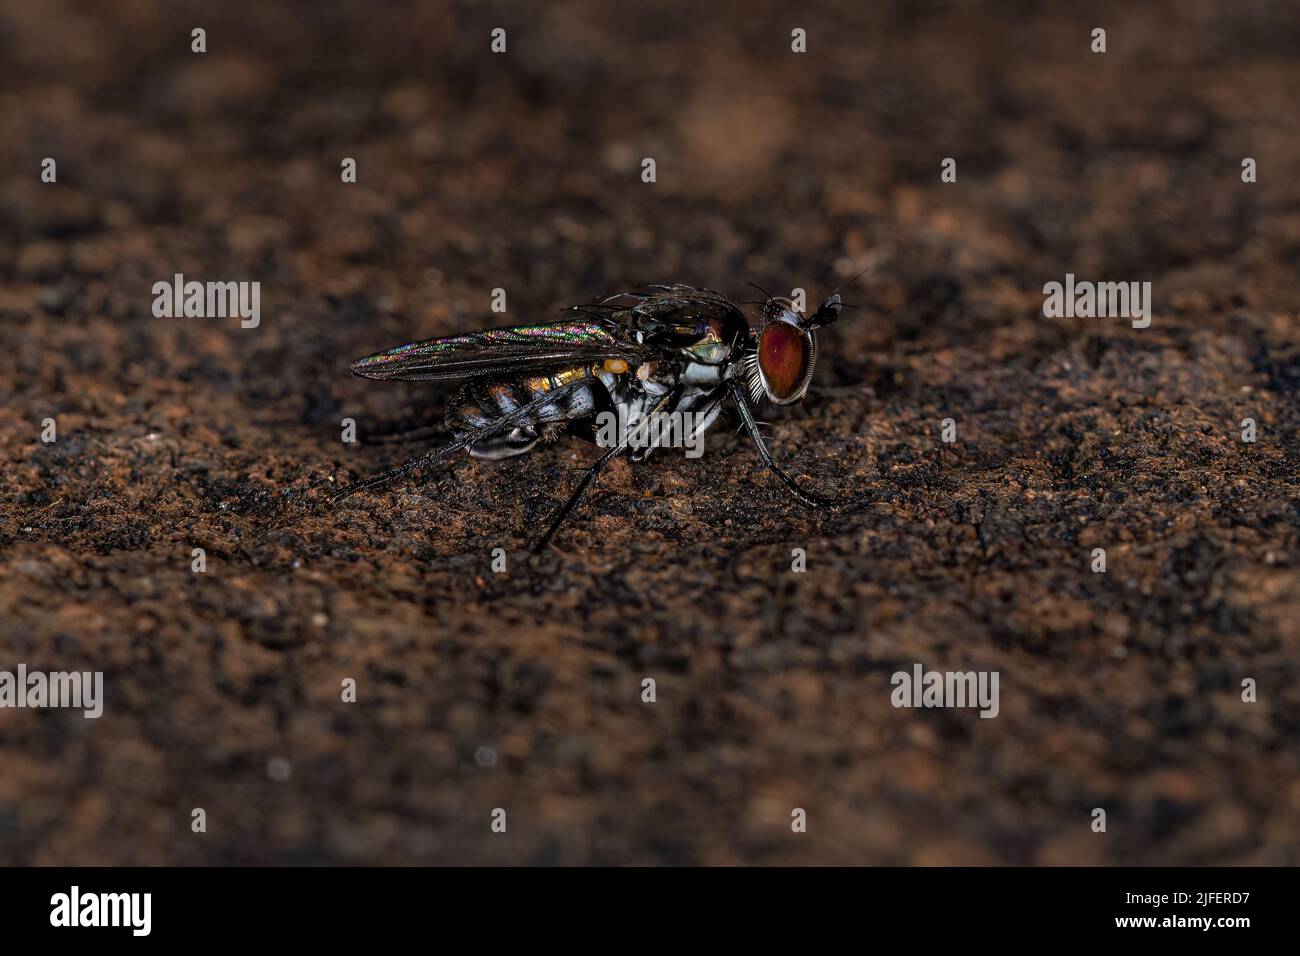 Adult Long-legged Fly of the Family Dolichopodidae Stock Photo